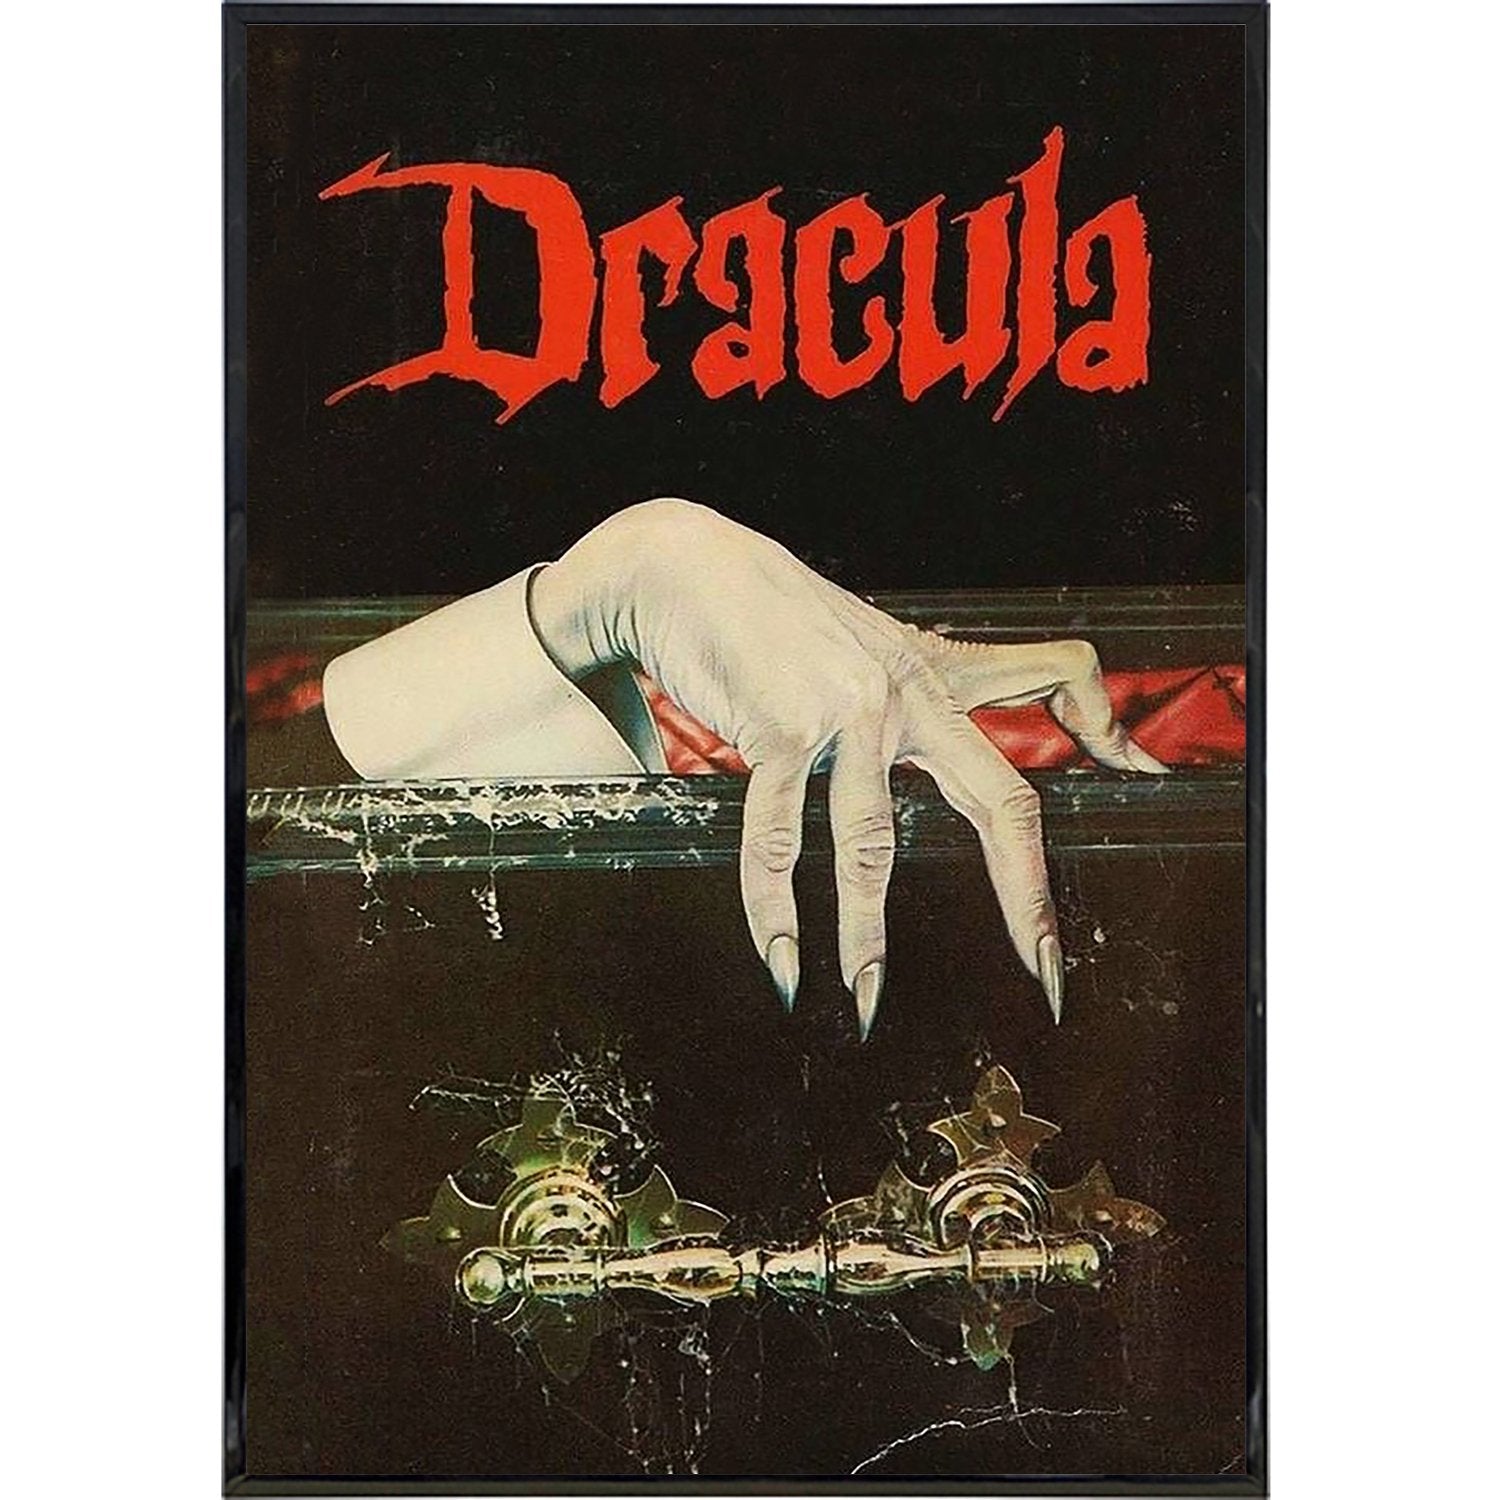 Dracula　Print　Cover　Original　Book　Underground　The　Original